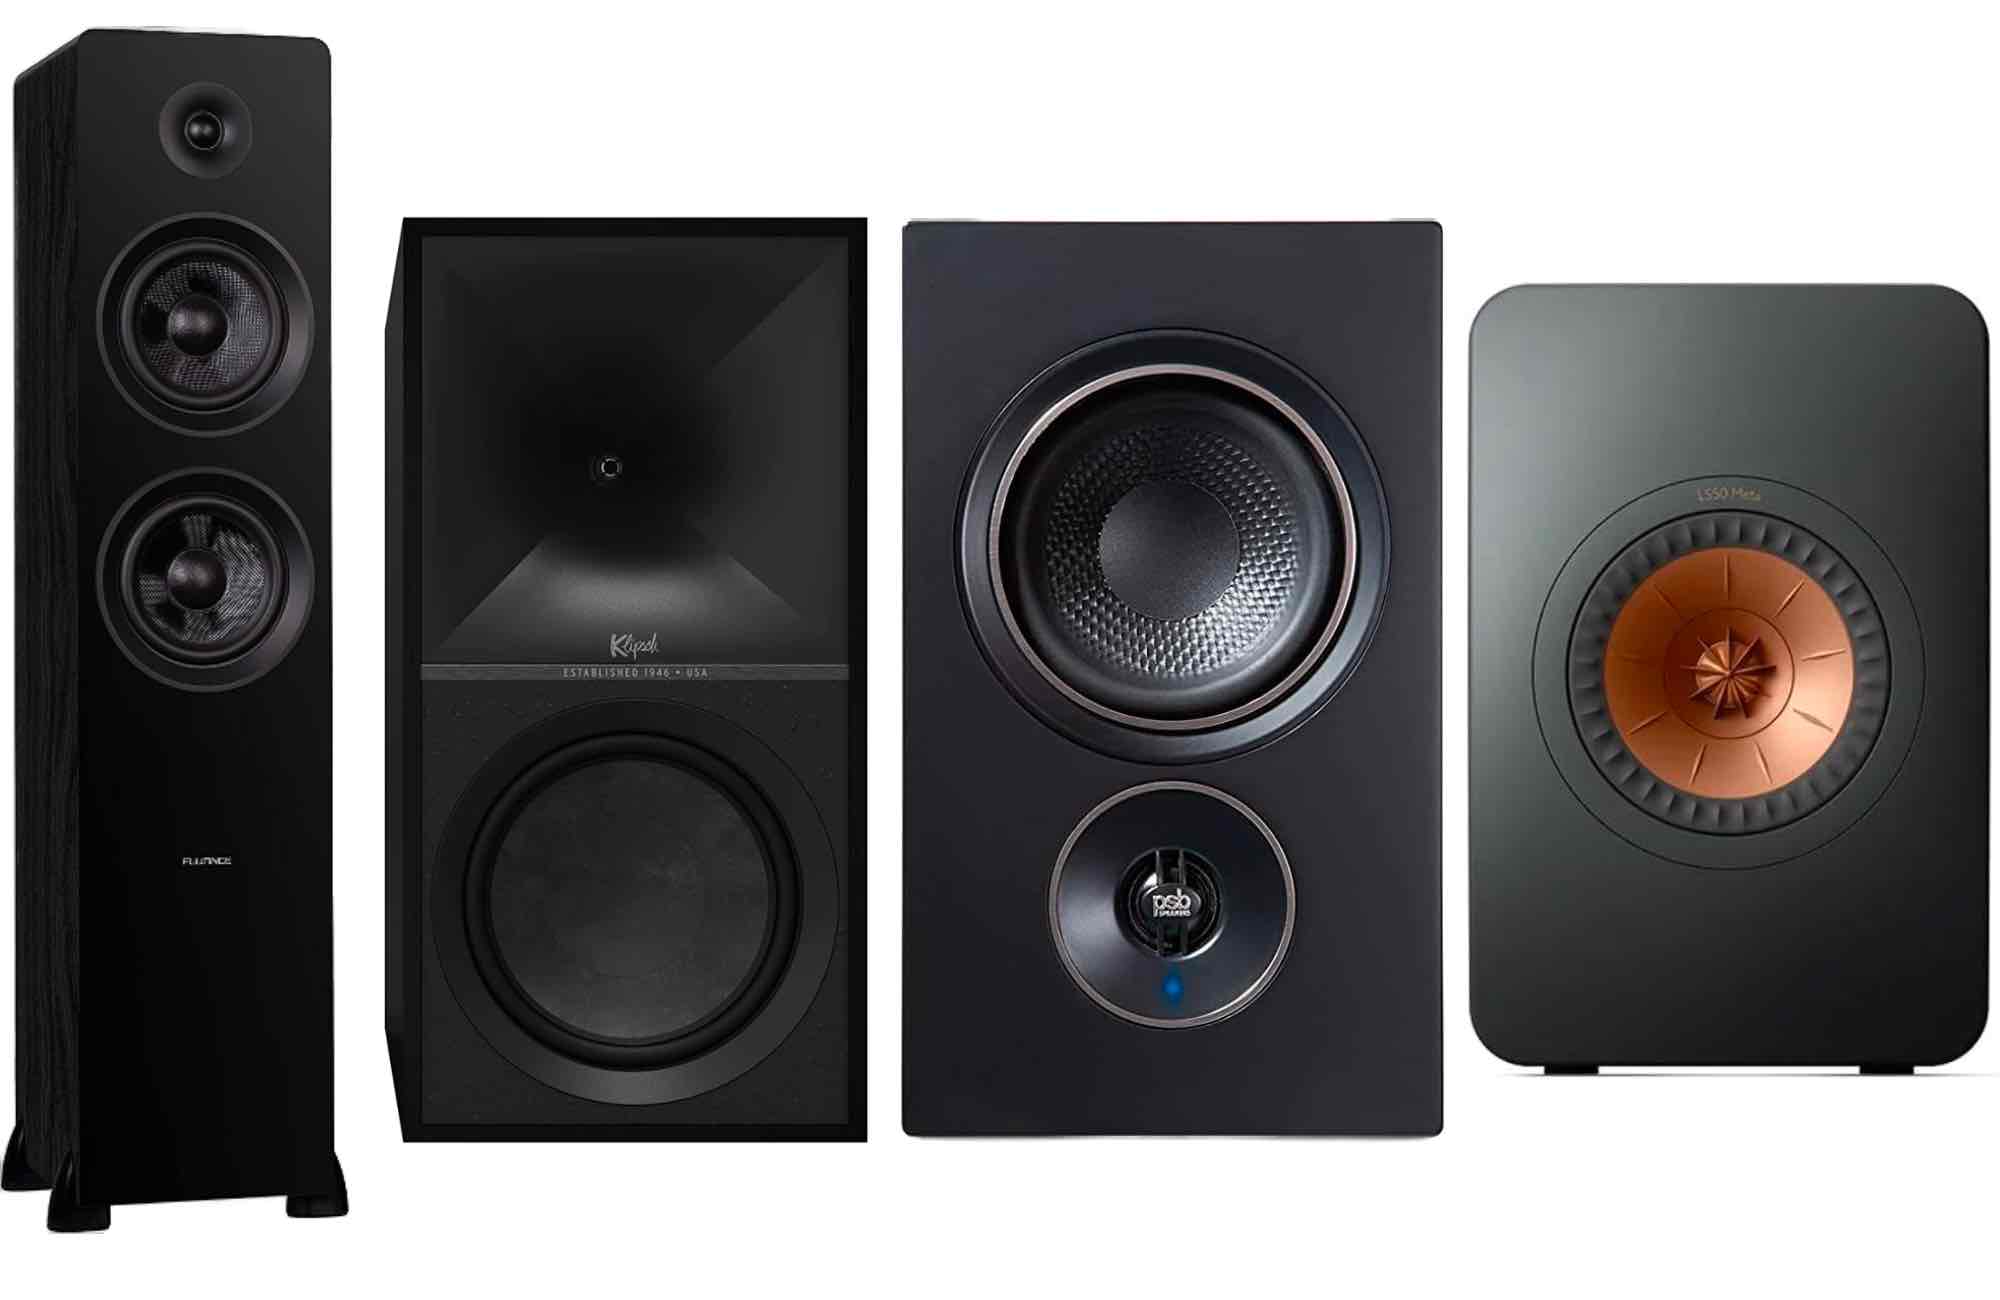 https://www.popsci.com/uploads/2023/06/14/The-best-turntable-speakers.jpg?auto=webp